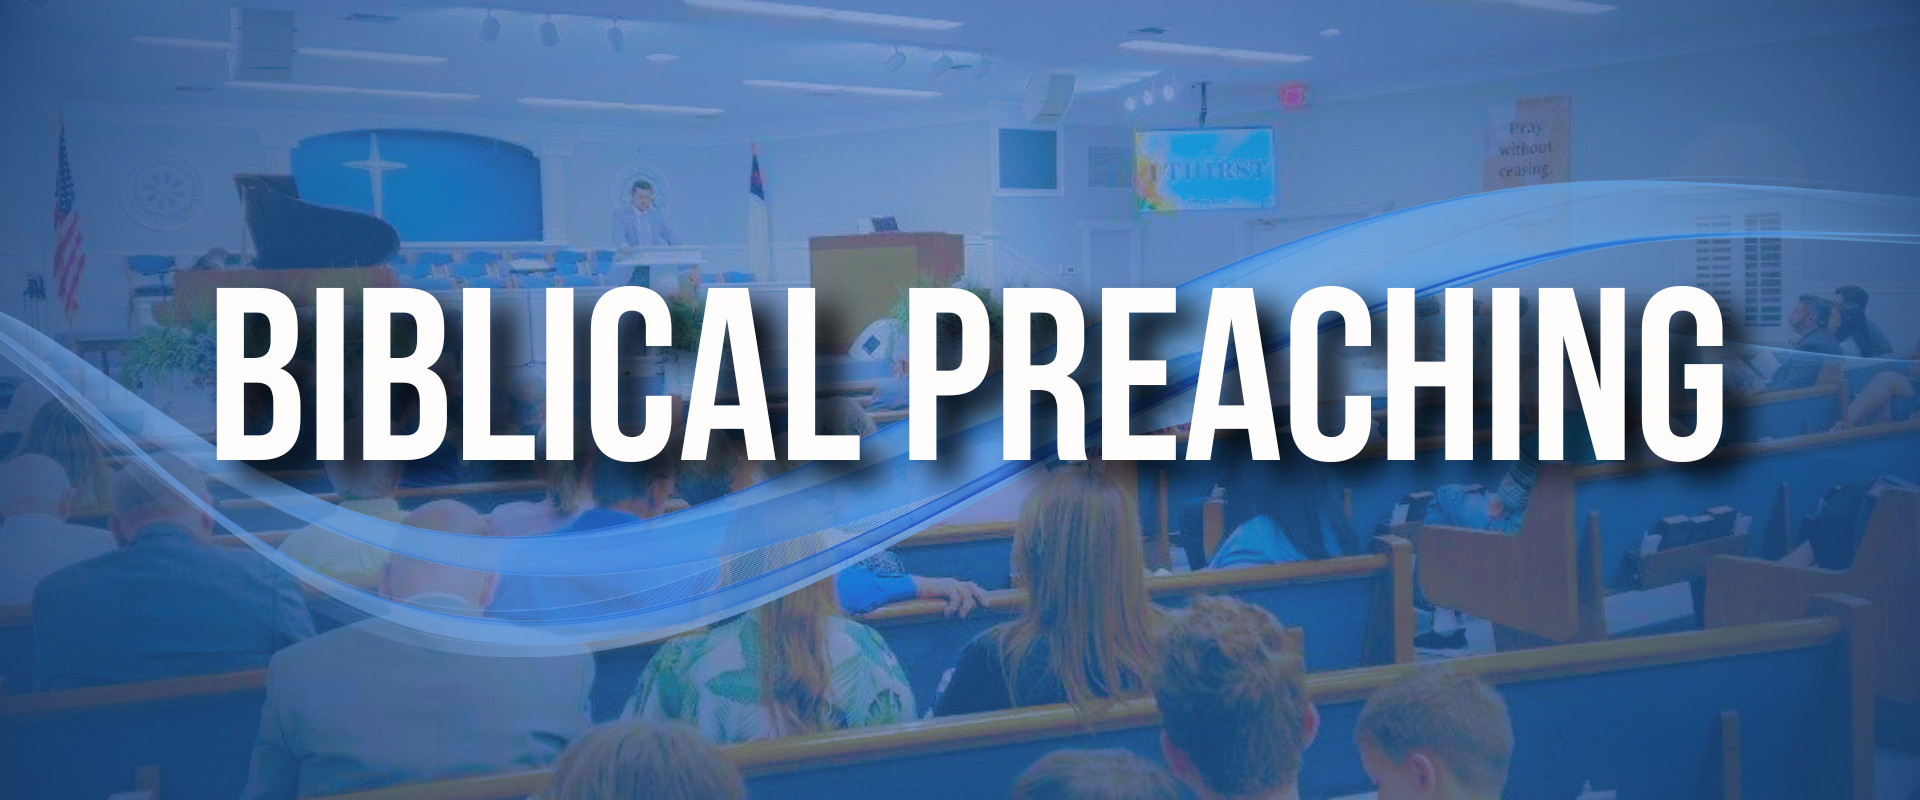 Biblical Preaching | Bible Baptist Church of Fort Pierce, FL